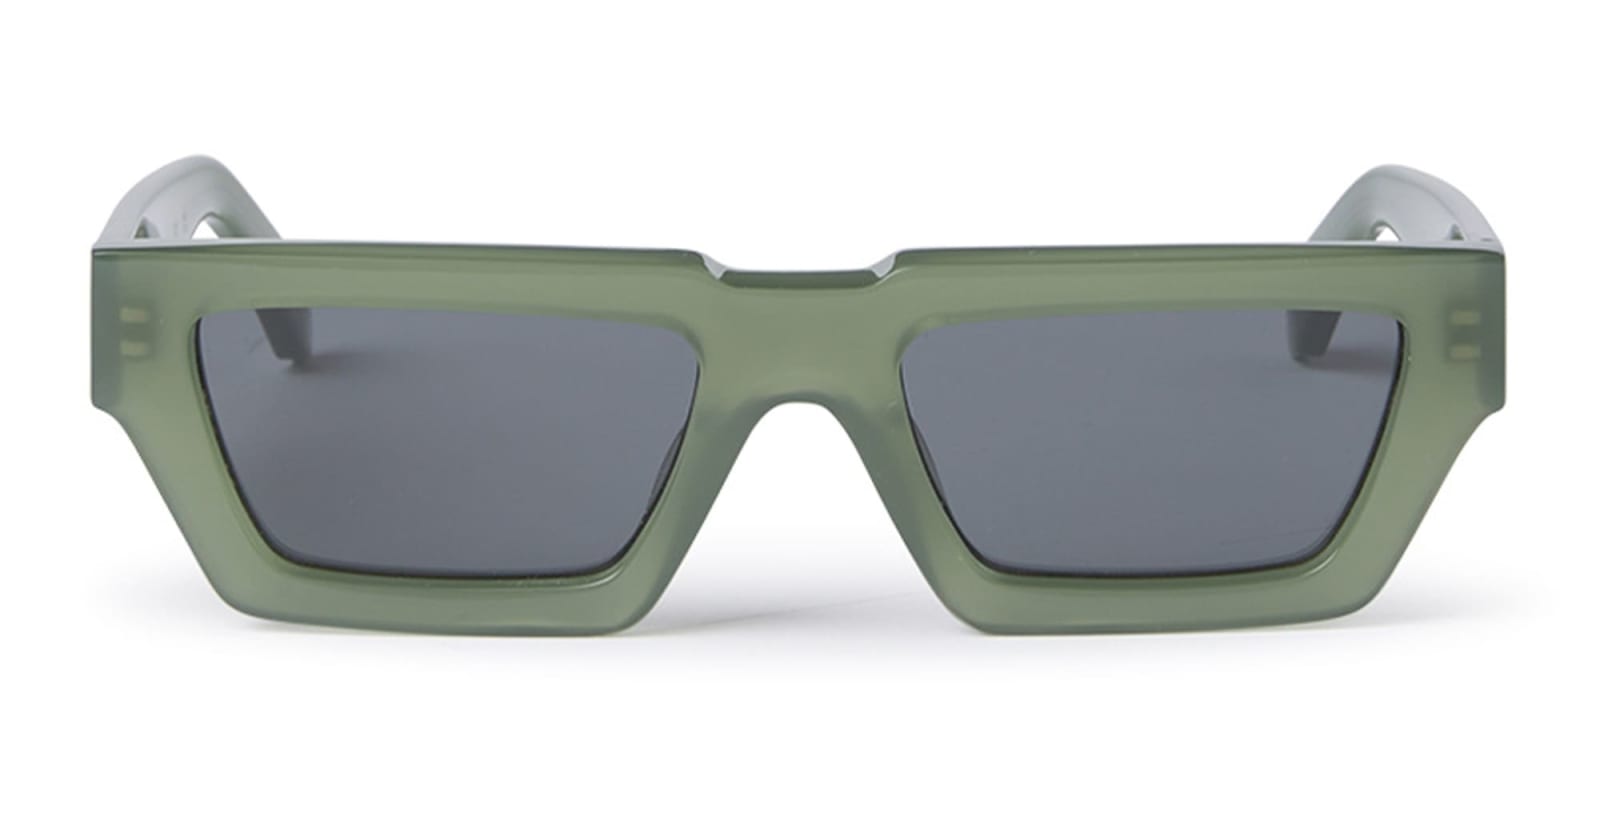 Off-White Manchester - Olive Green / Dark Grey Sunglasses